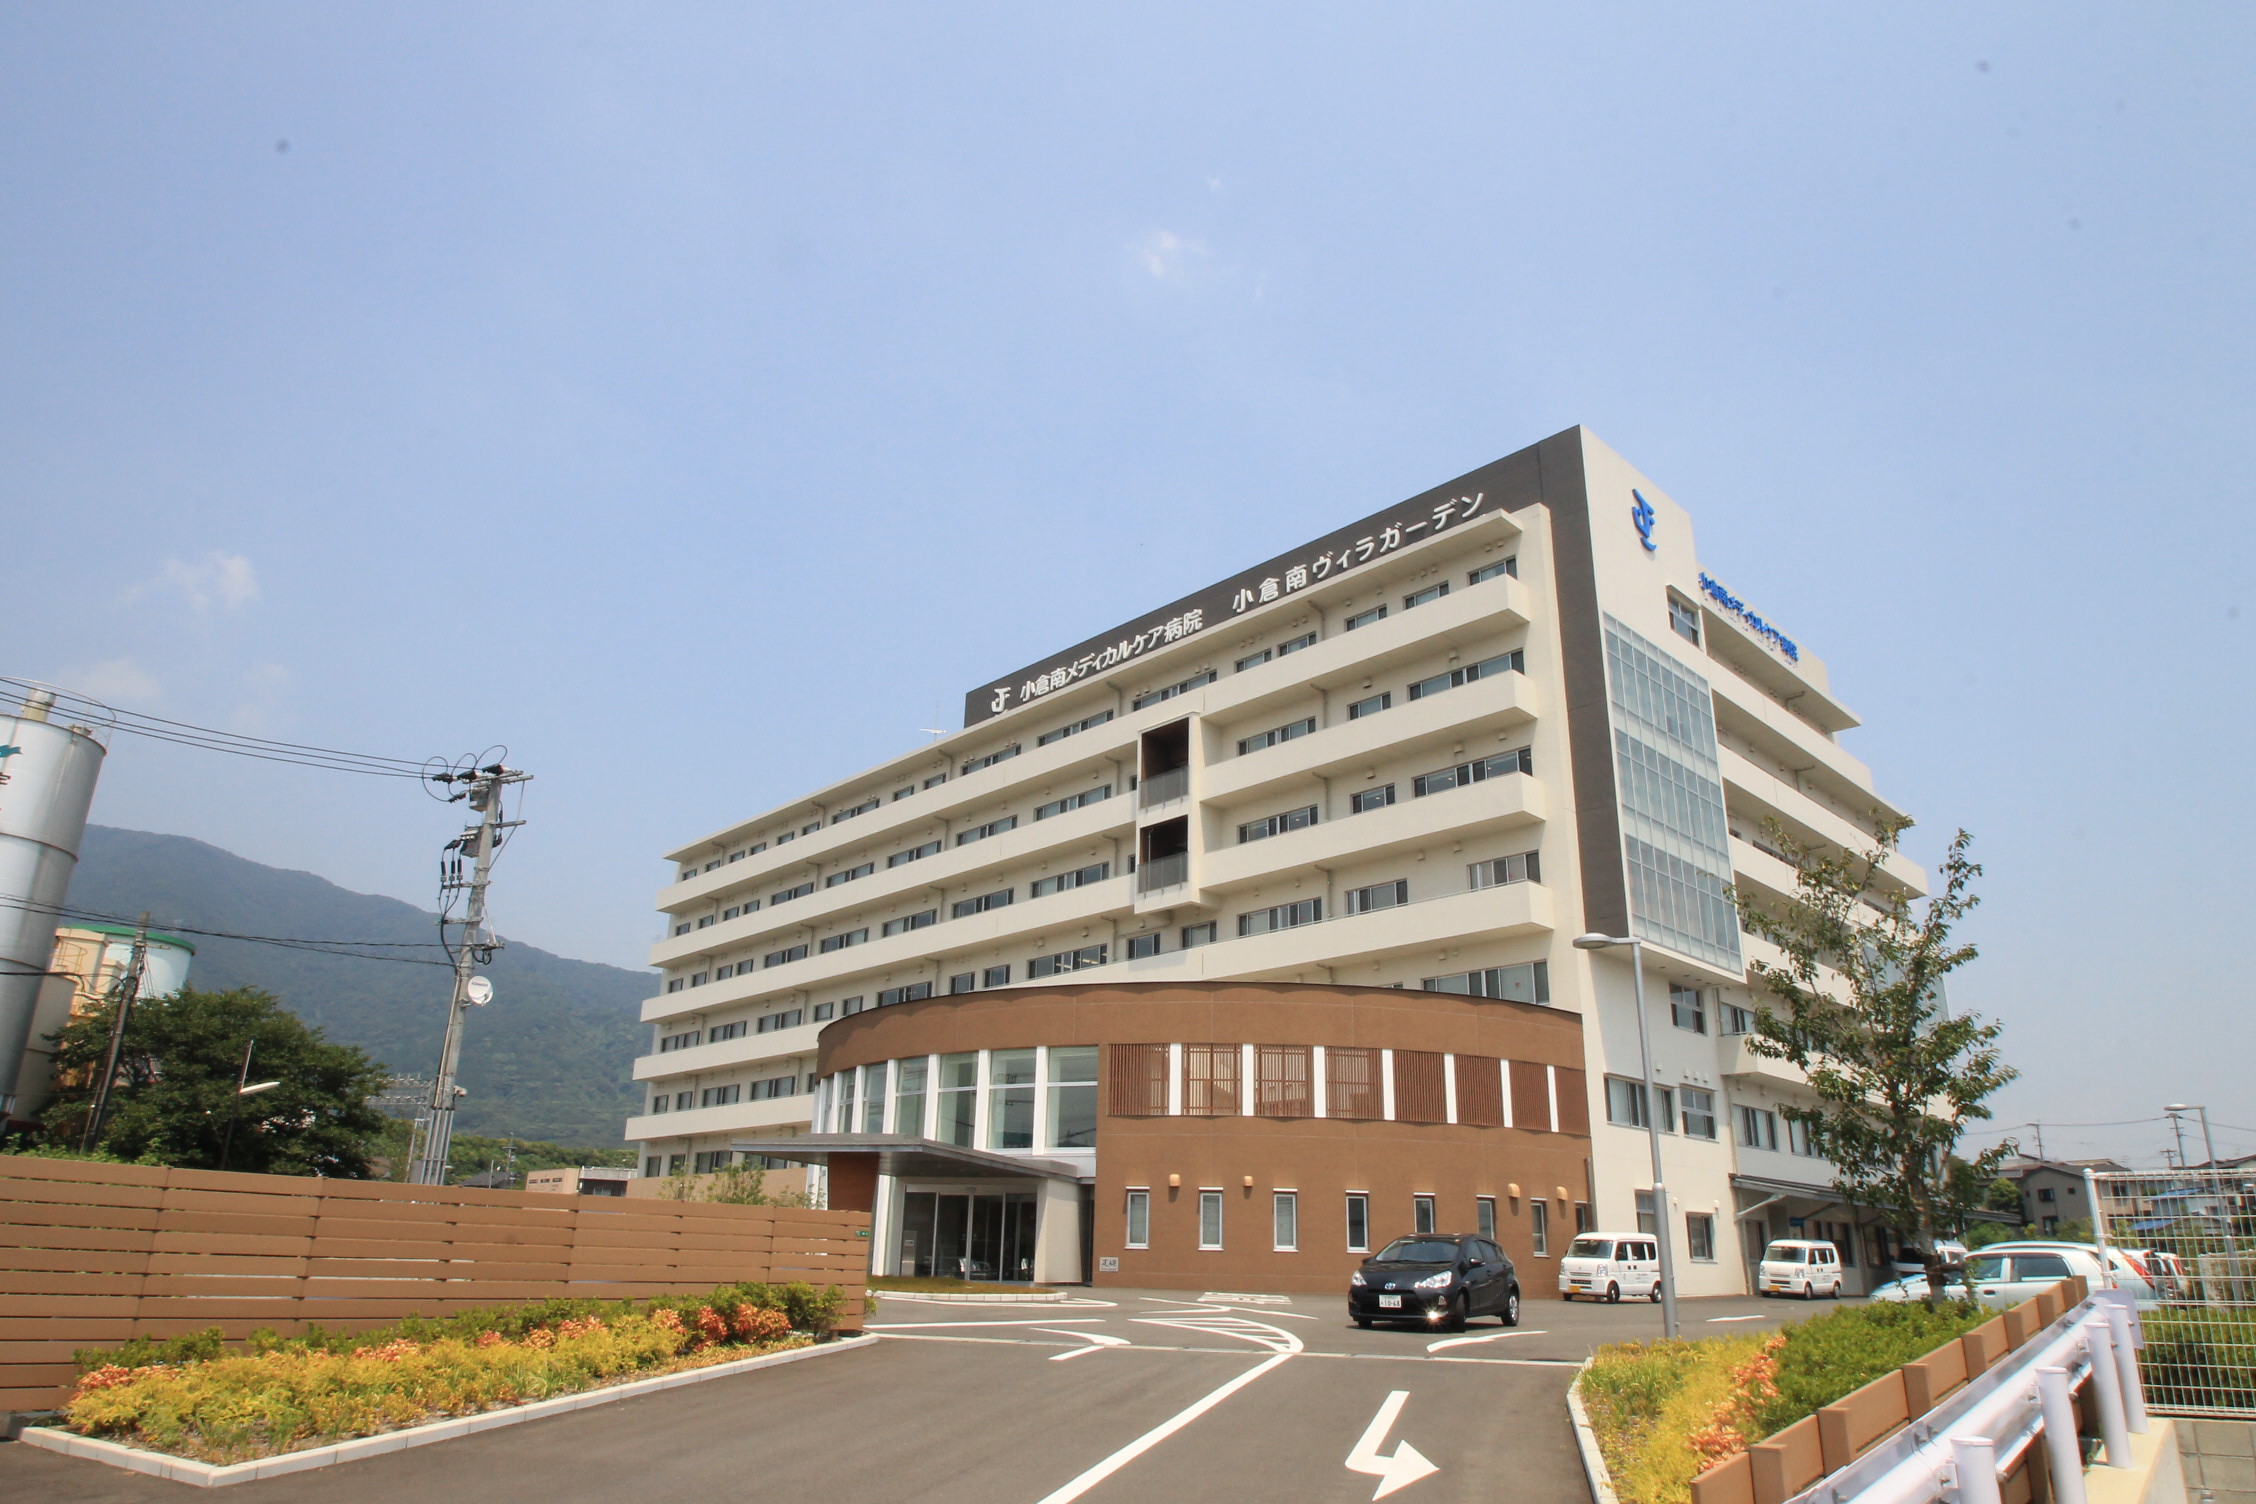 Hospital. 1521m until the medical corporation Association AkiraAi Board Kokuraminami Medical care hospital (hospital)